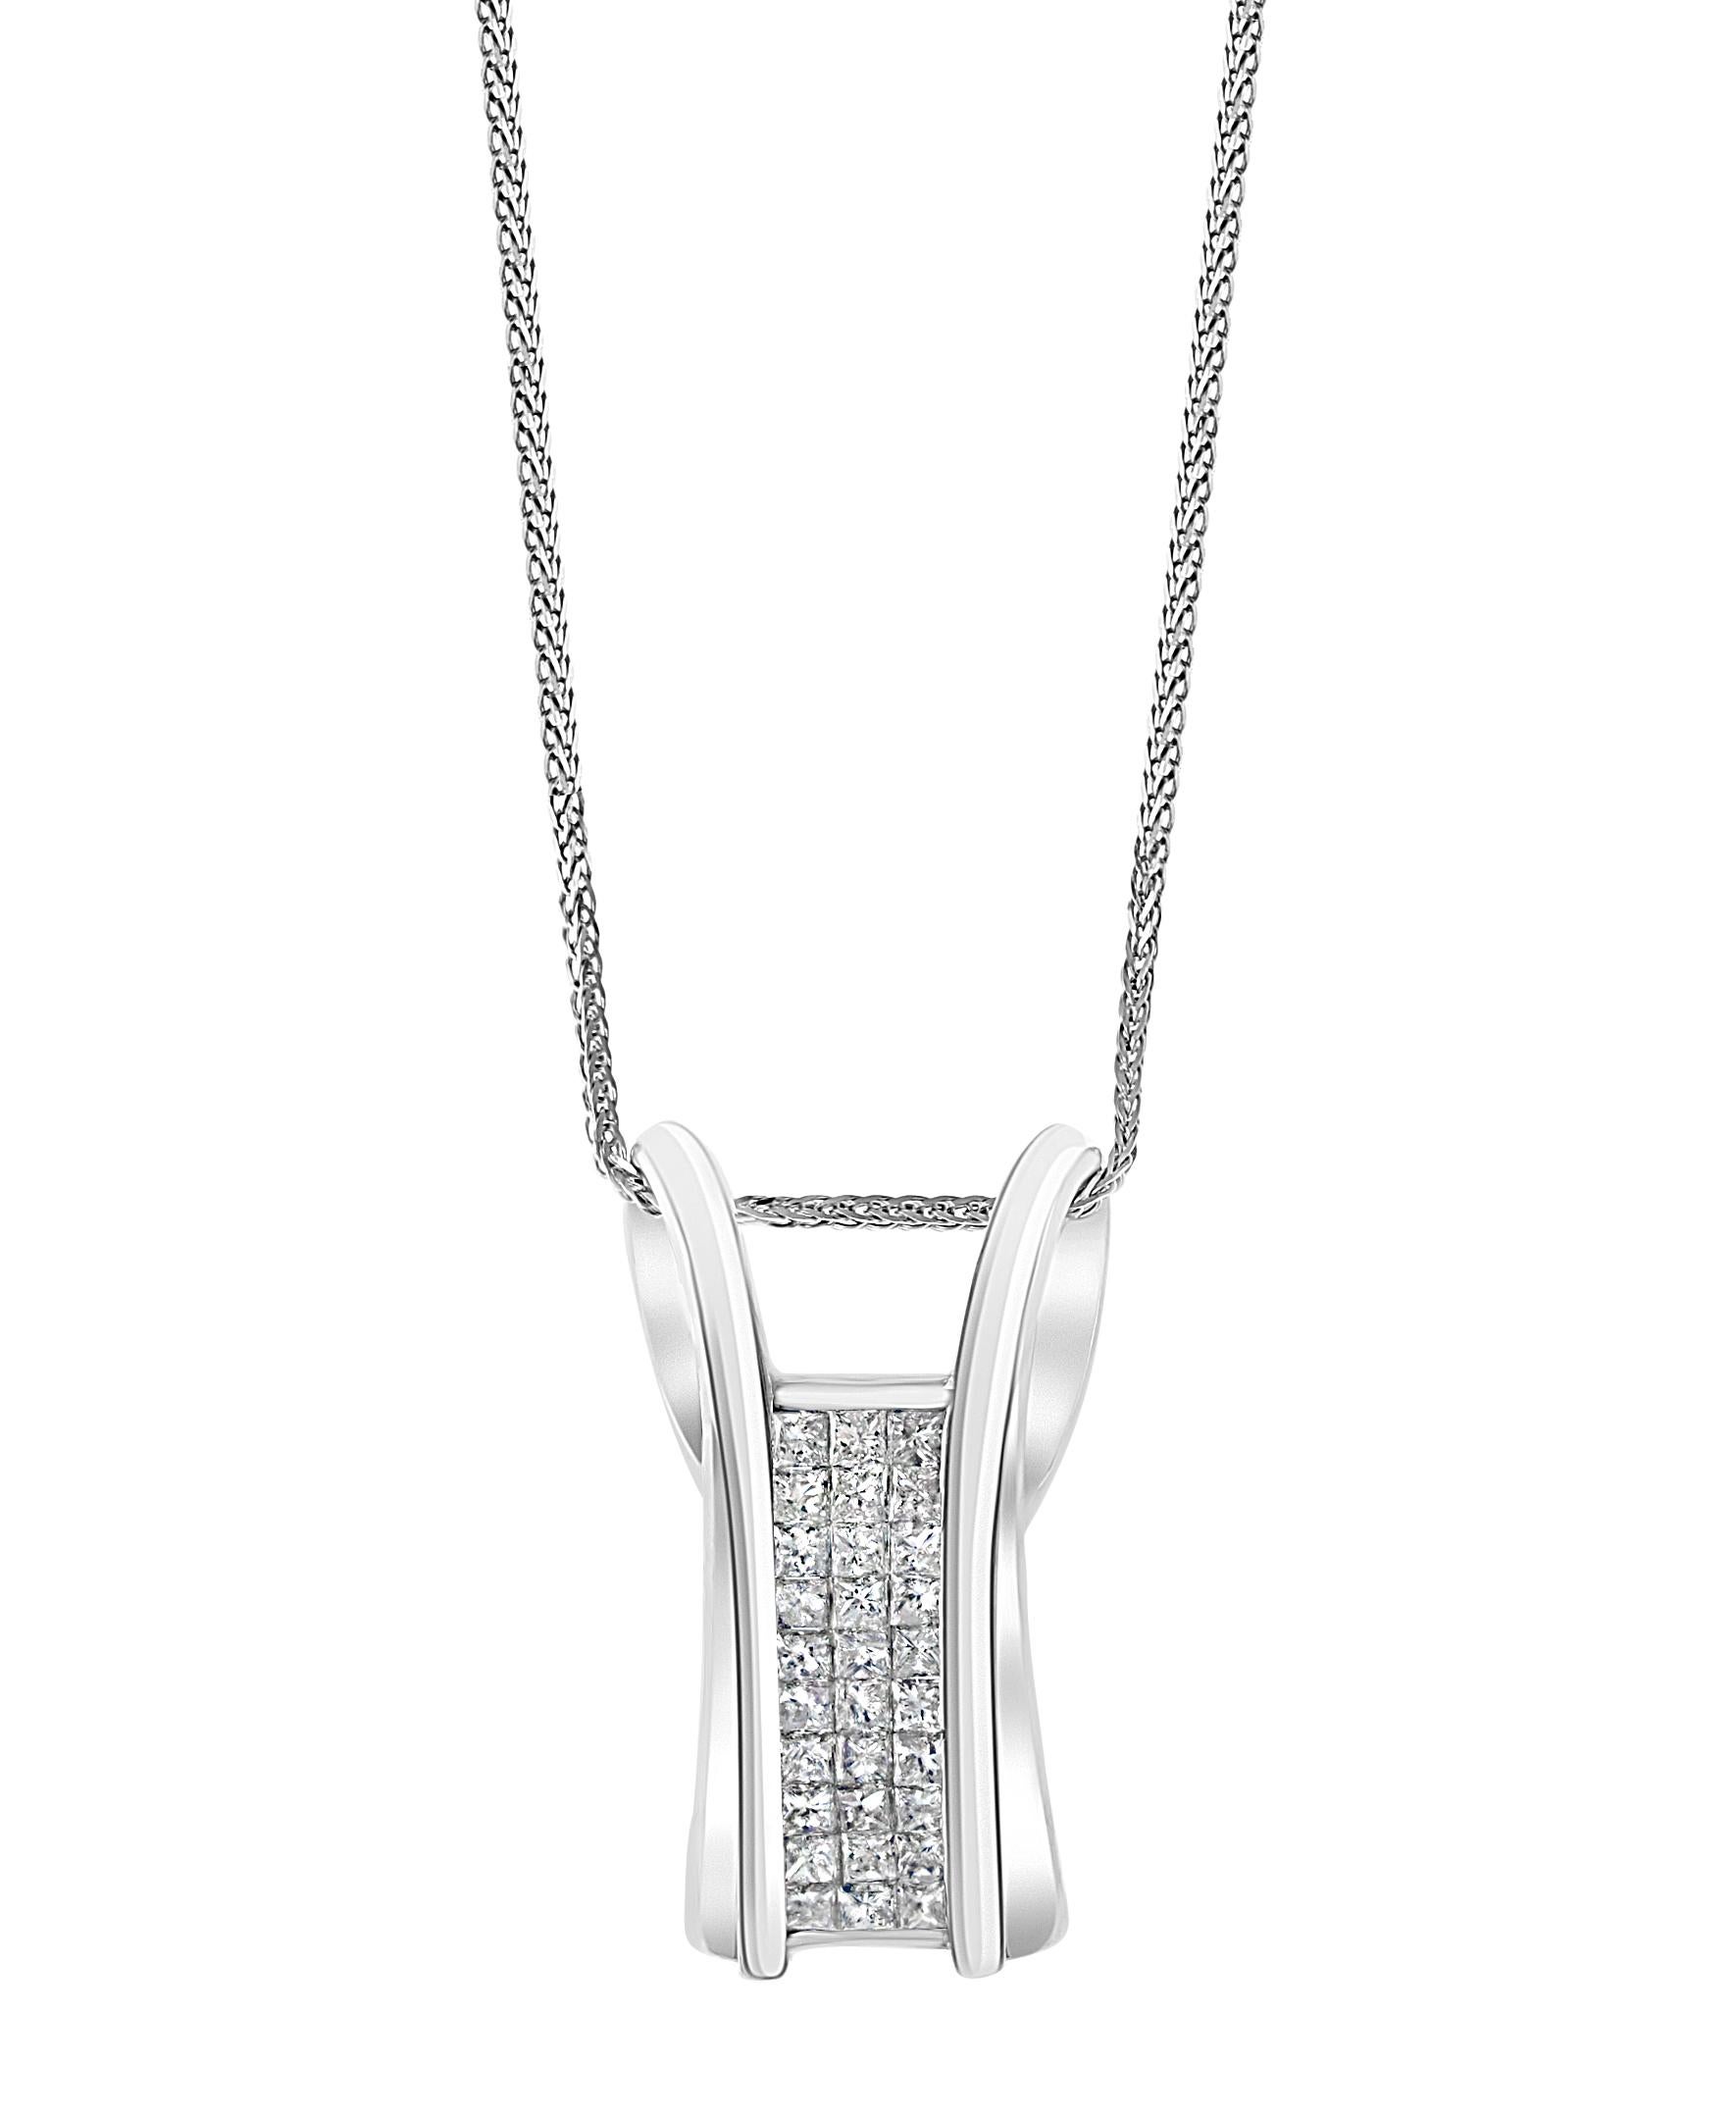 2.2 Carat Princess Cut Diamond Pendant/ Necklace 14 Karat White Gold with Chain 1